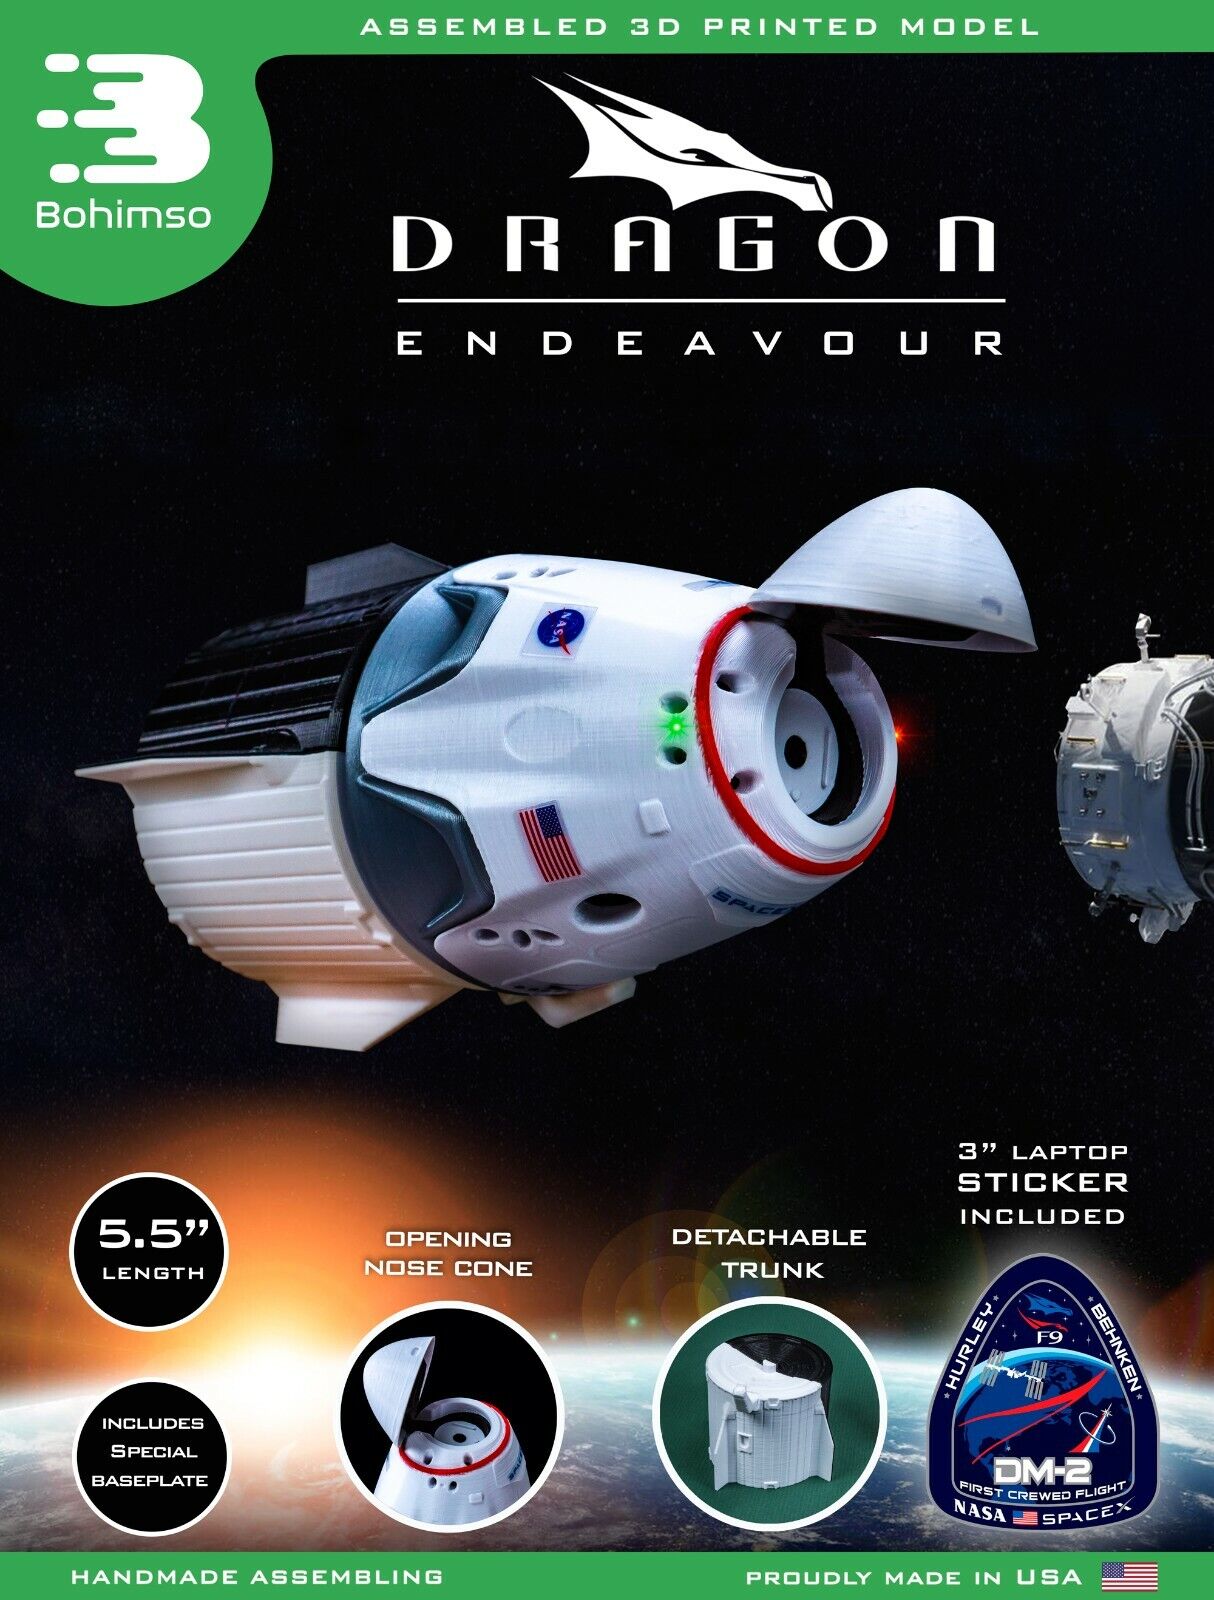 DRAGON 2 Endeavour Plastic Model SpaceX NASA Capsule Spacecraft 3D Print